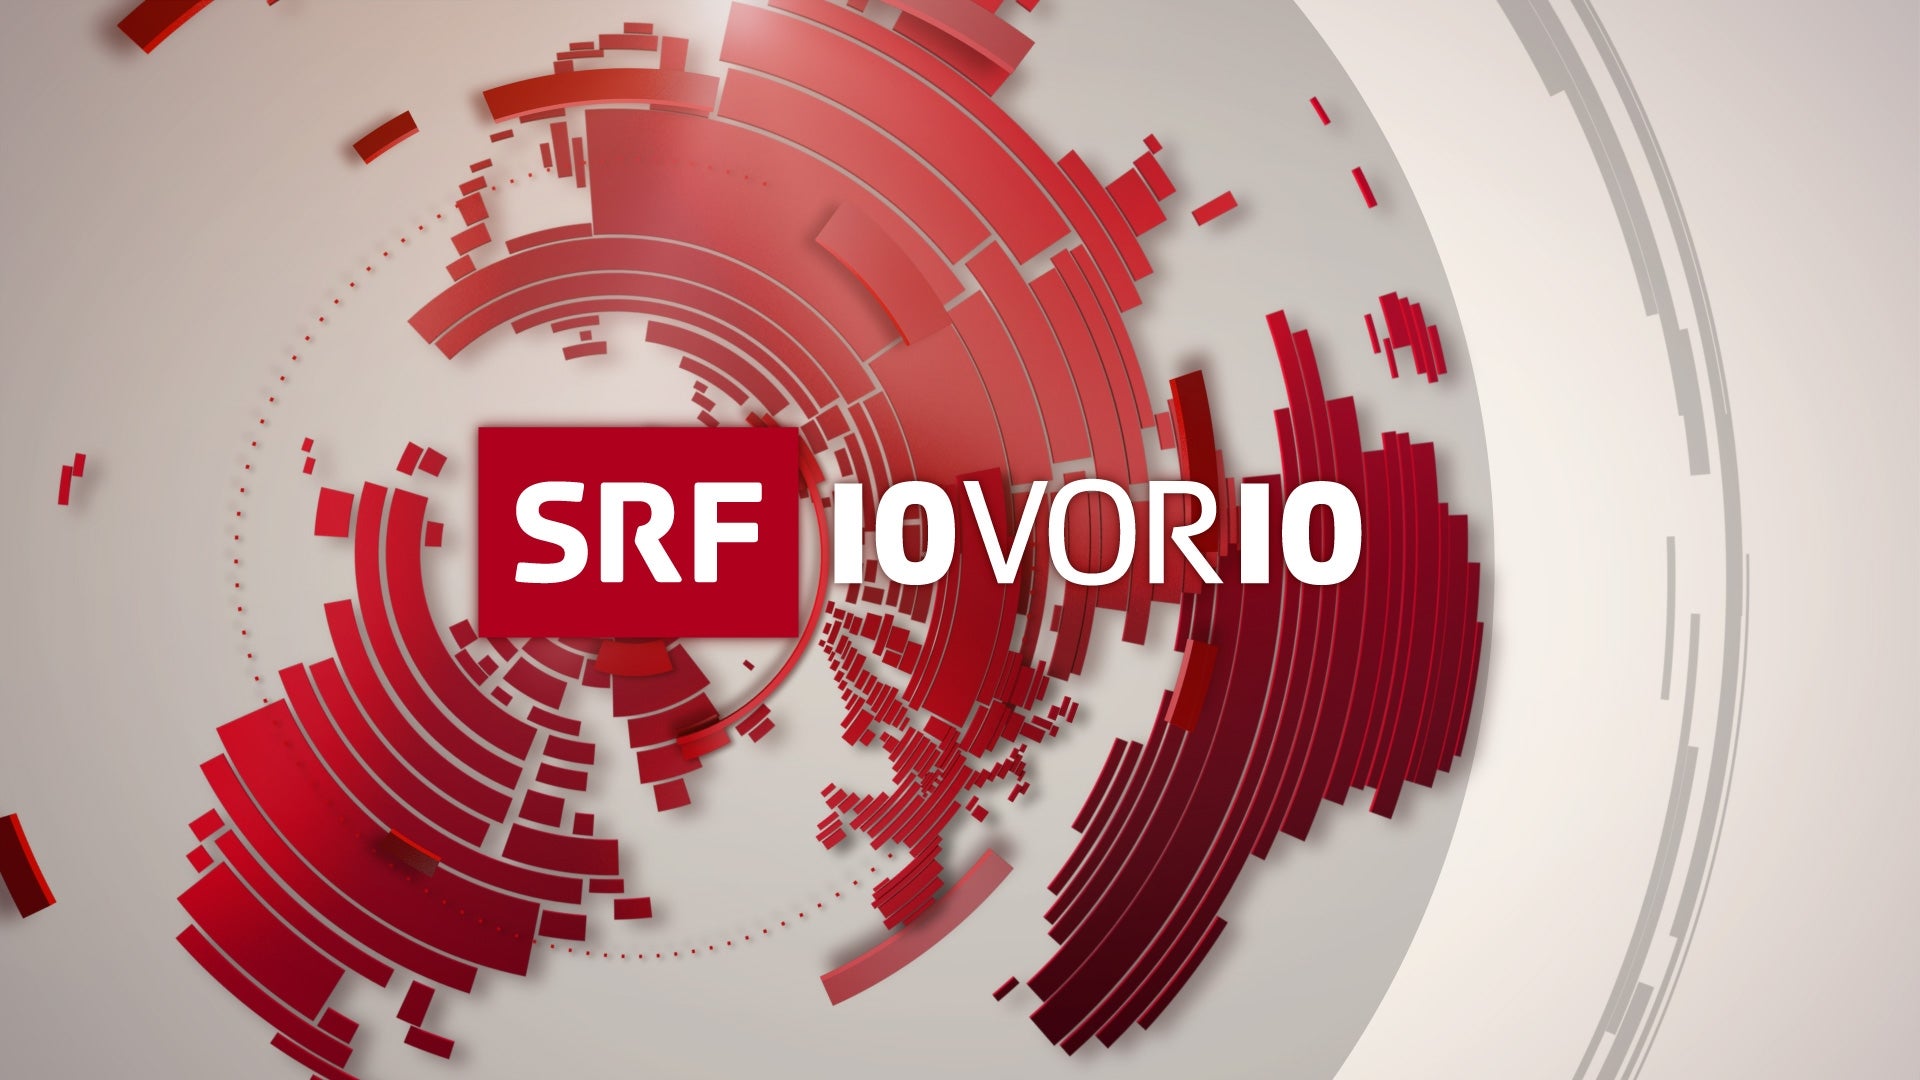 TV ratings for 10vor10 in Turkey. SRF 1 TV series